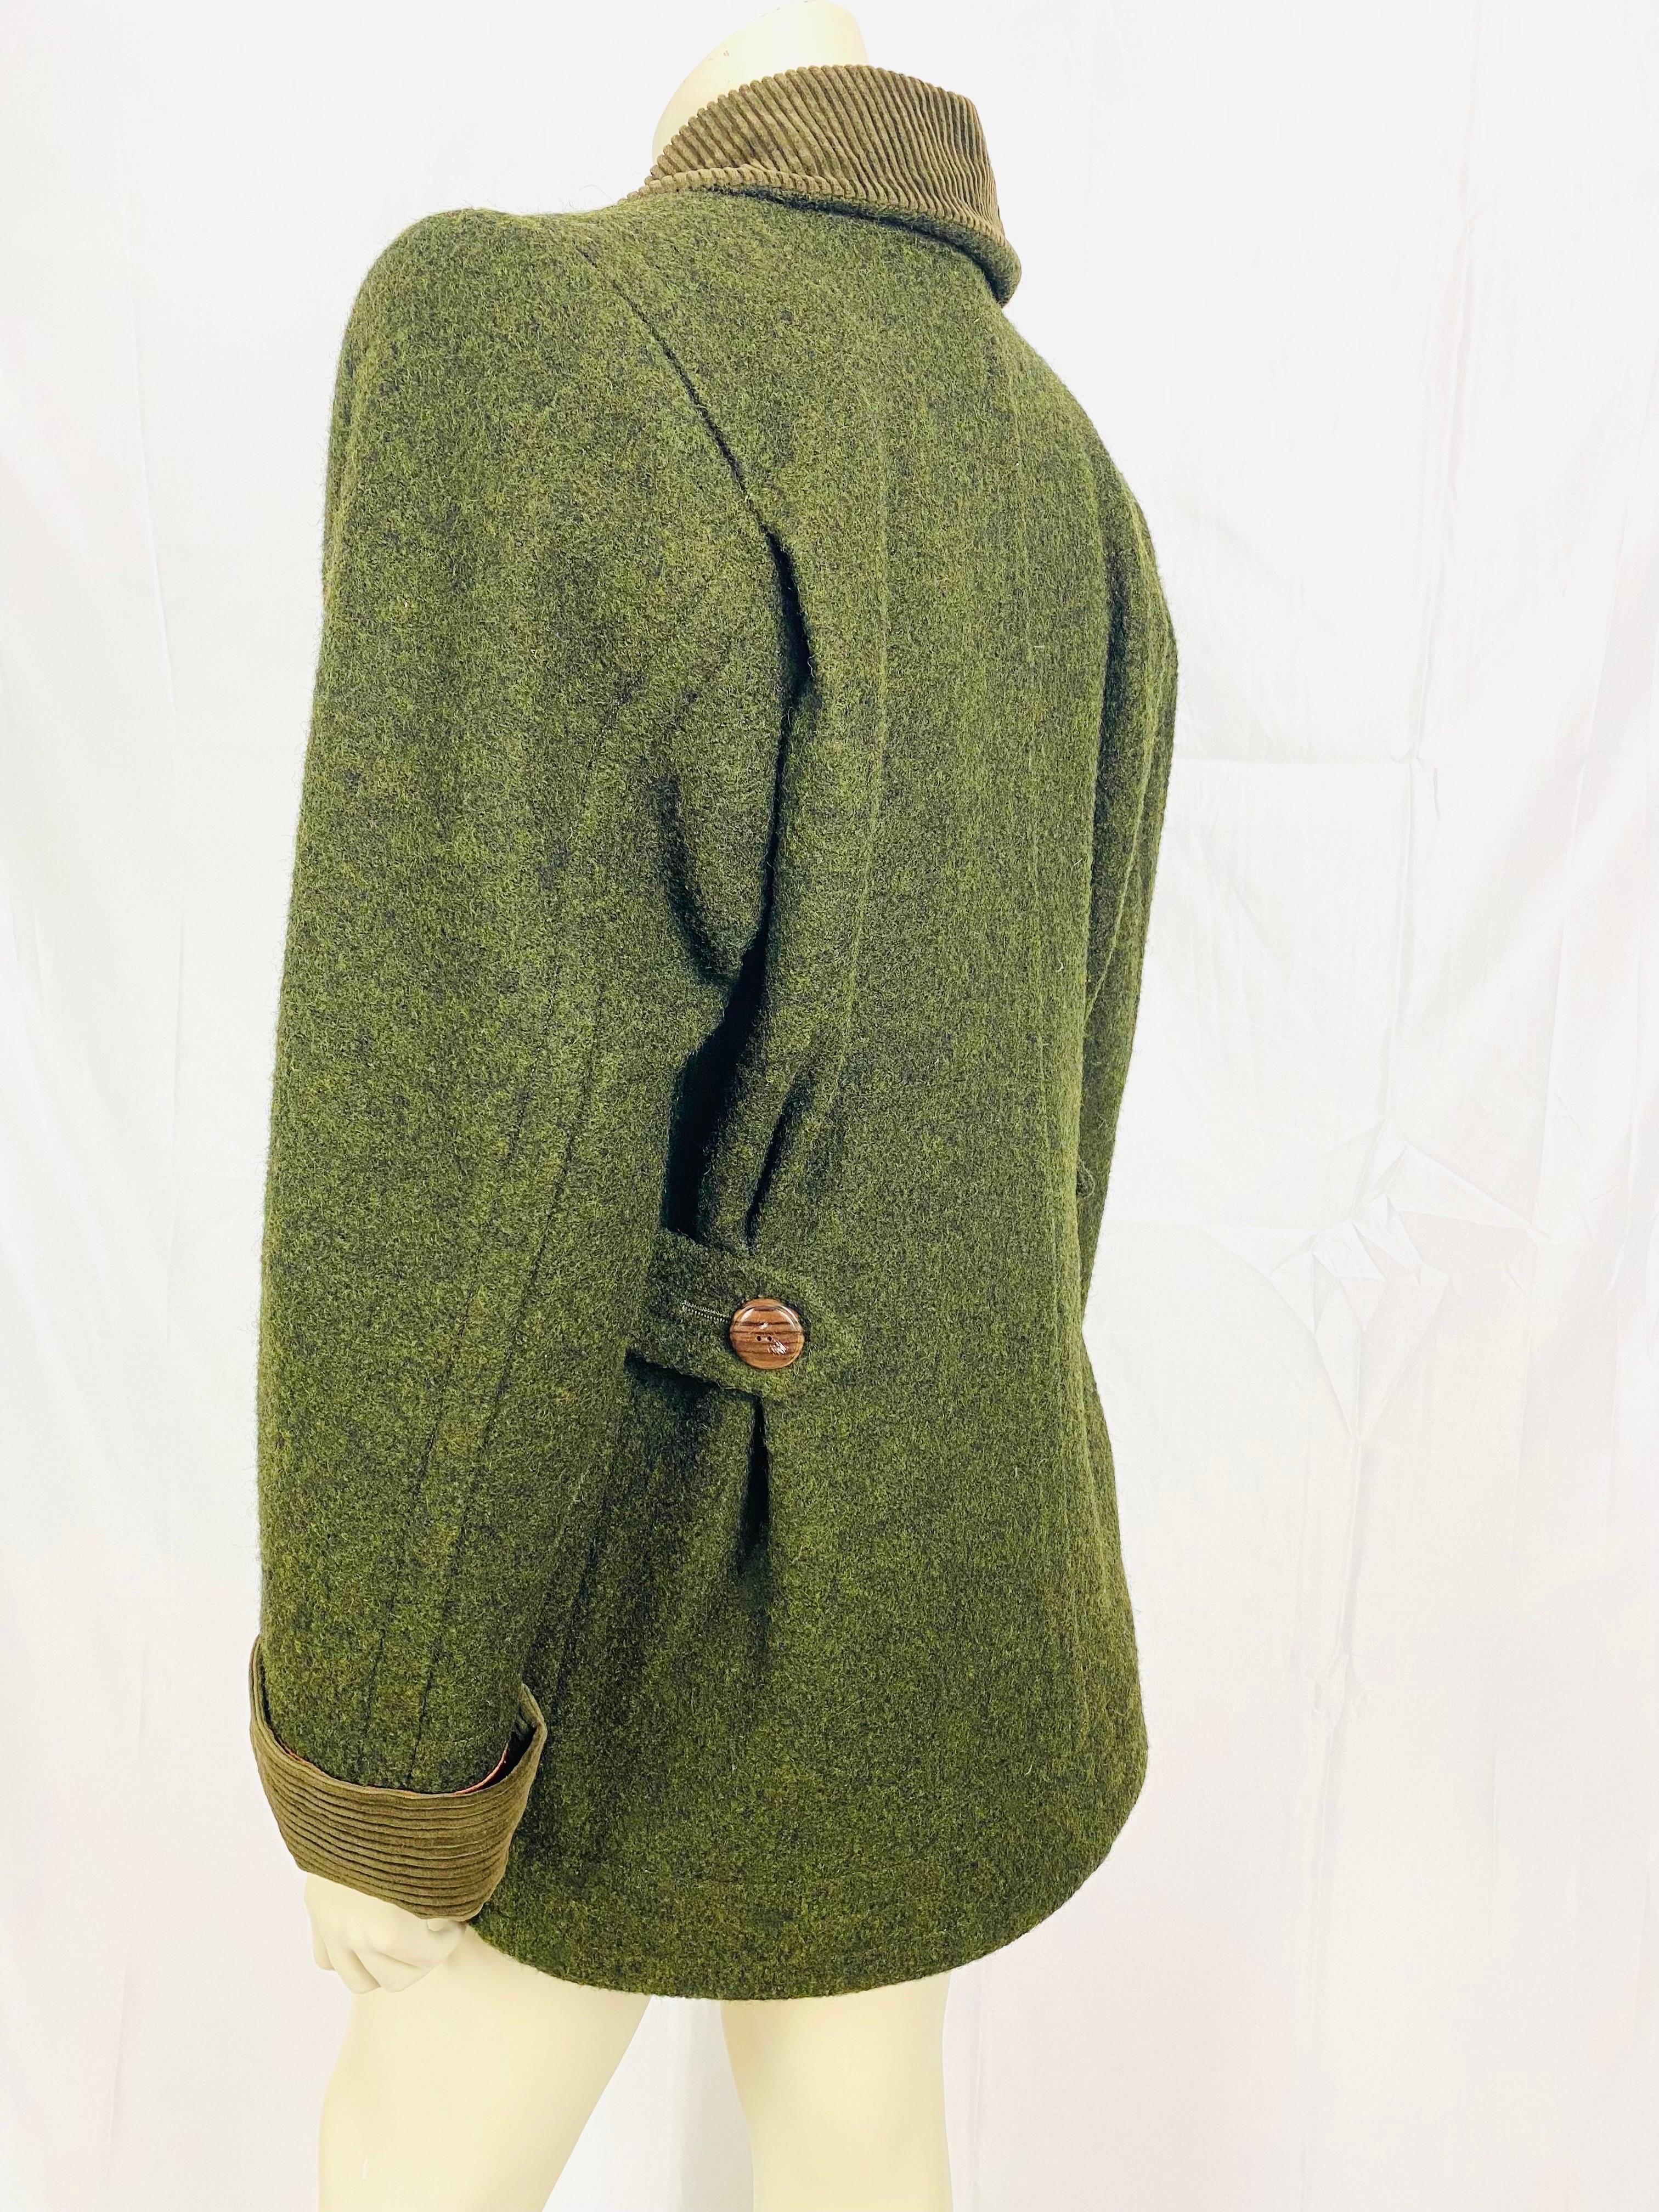 Women's or Men's Superb vintage Yves saint laurent winter jacket circa 1970, in khaki boiled wool